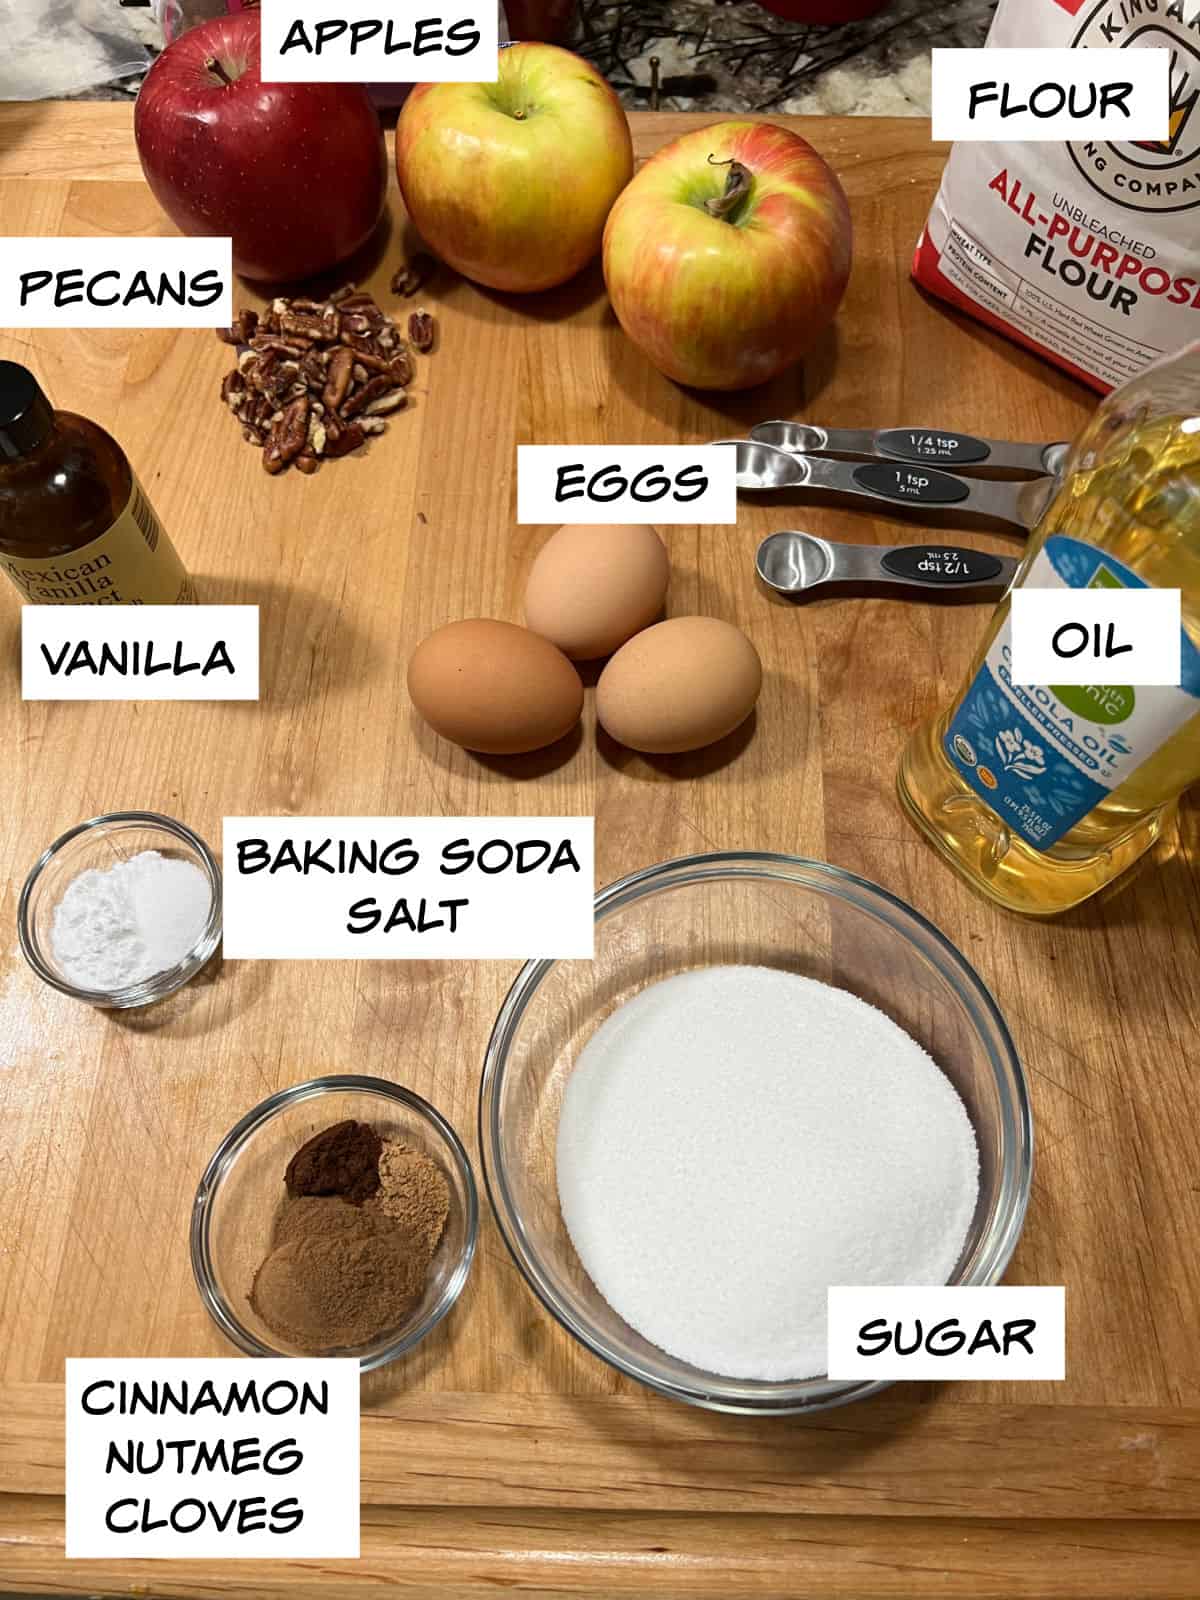 Ingredients: apples, pecans, flour, oil, eggs, sugar, vanilla, baking soda, salt, cinnamon, nutmeg, and cloves. 